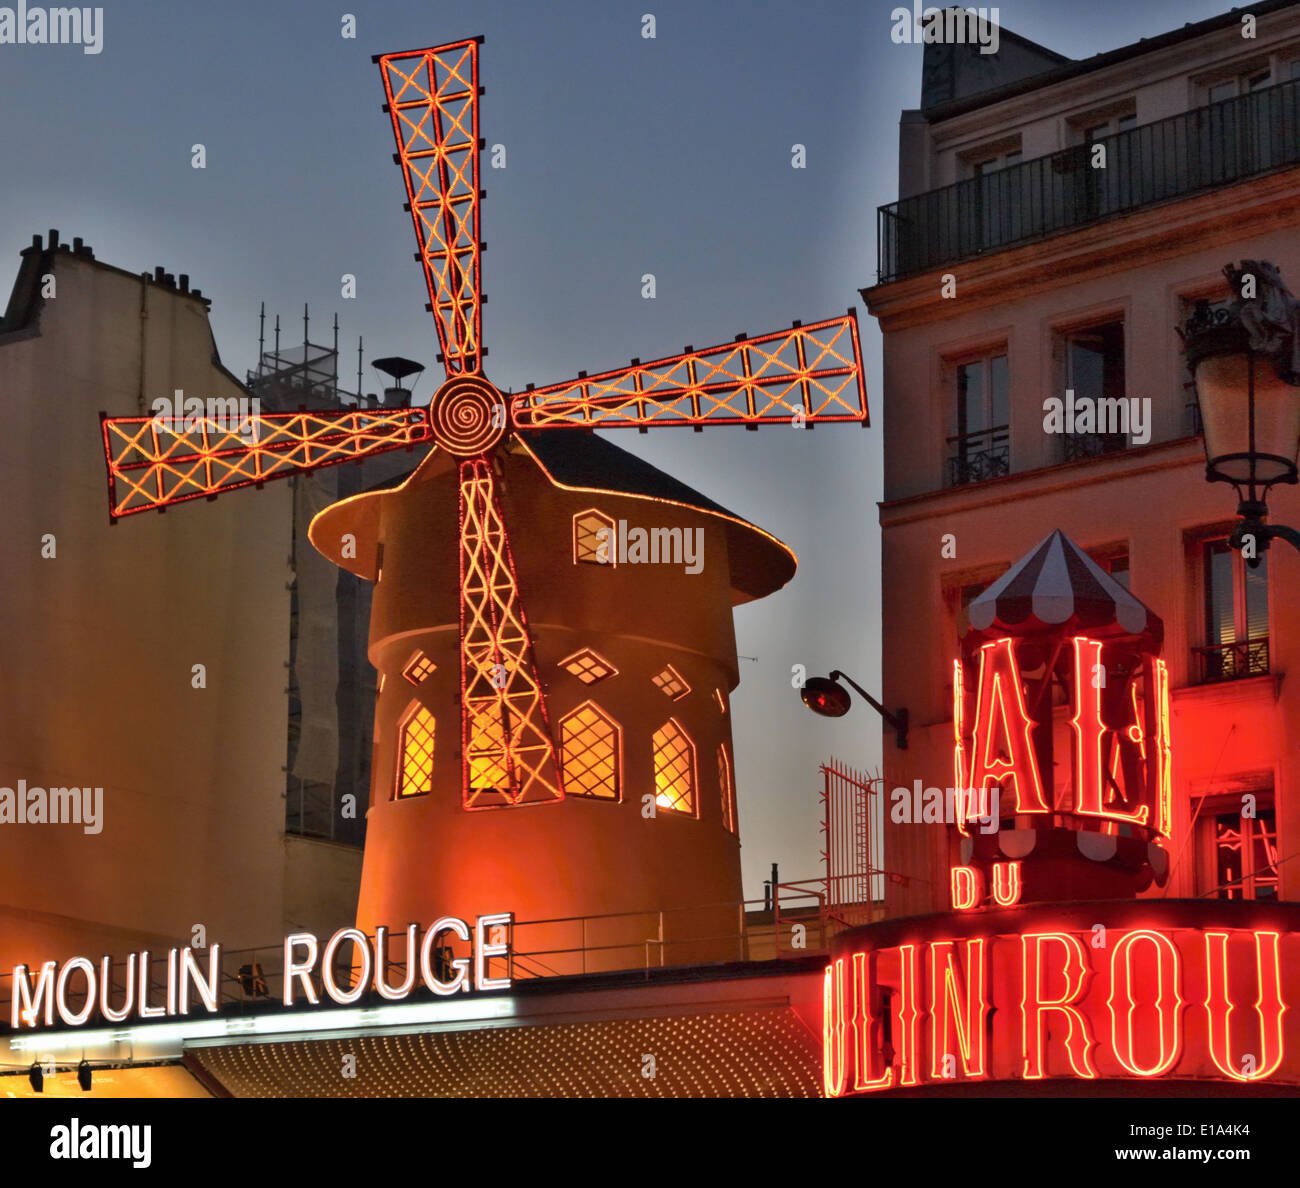 Moulin Rouge revue in Paris Stock Photo